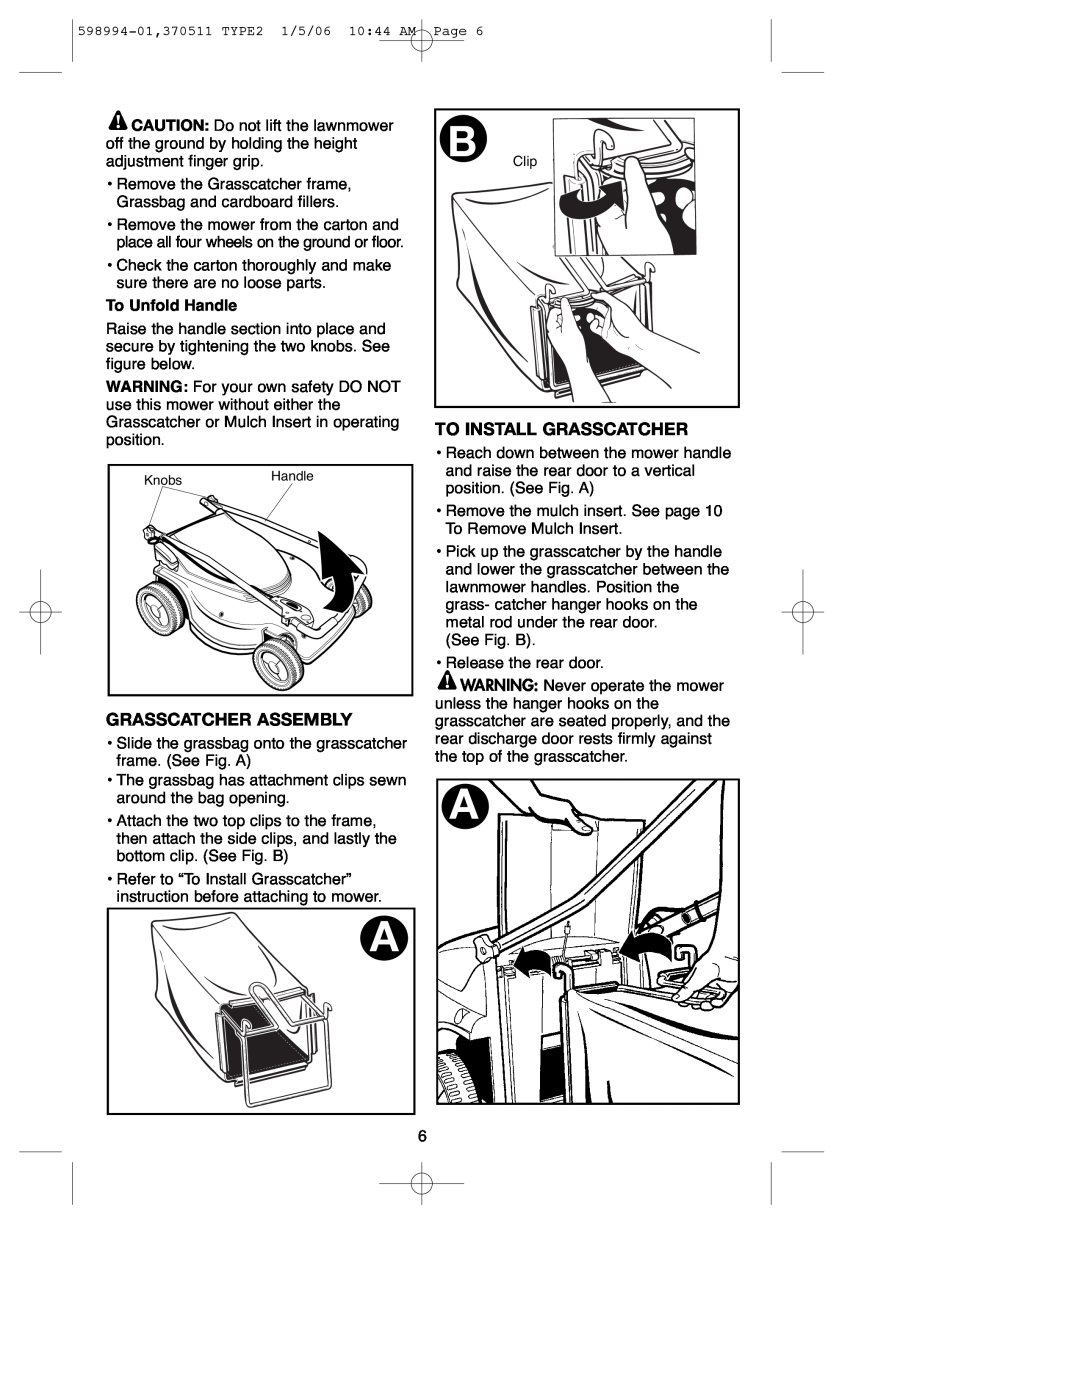 DeWalt 900.370511 instruction manual Grasscatcher Assembly, To Install Grasscatcher, To Unfold Handle 